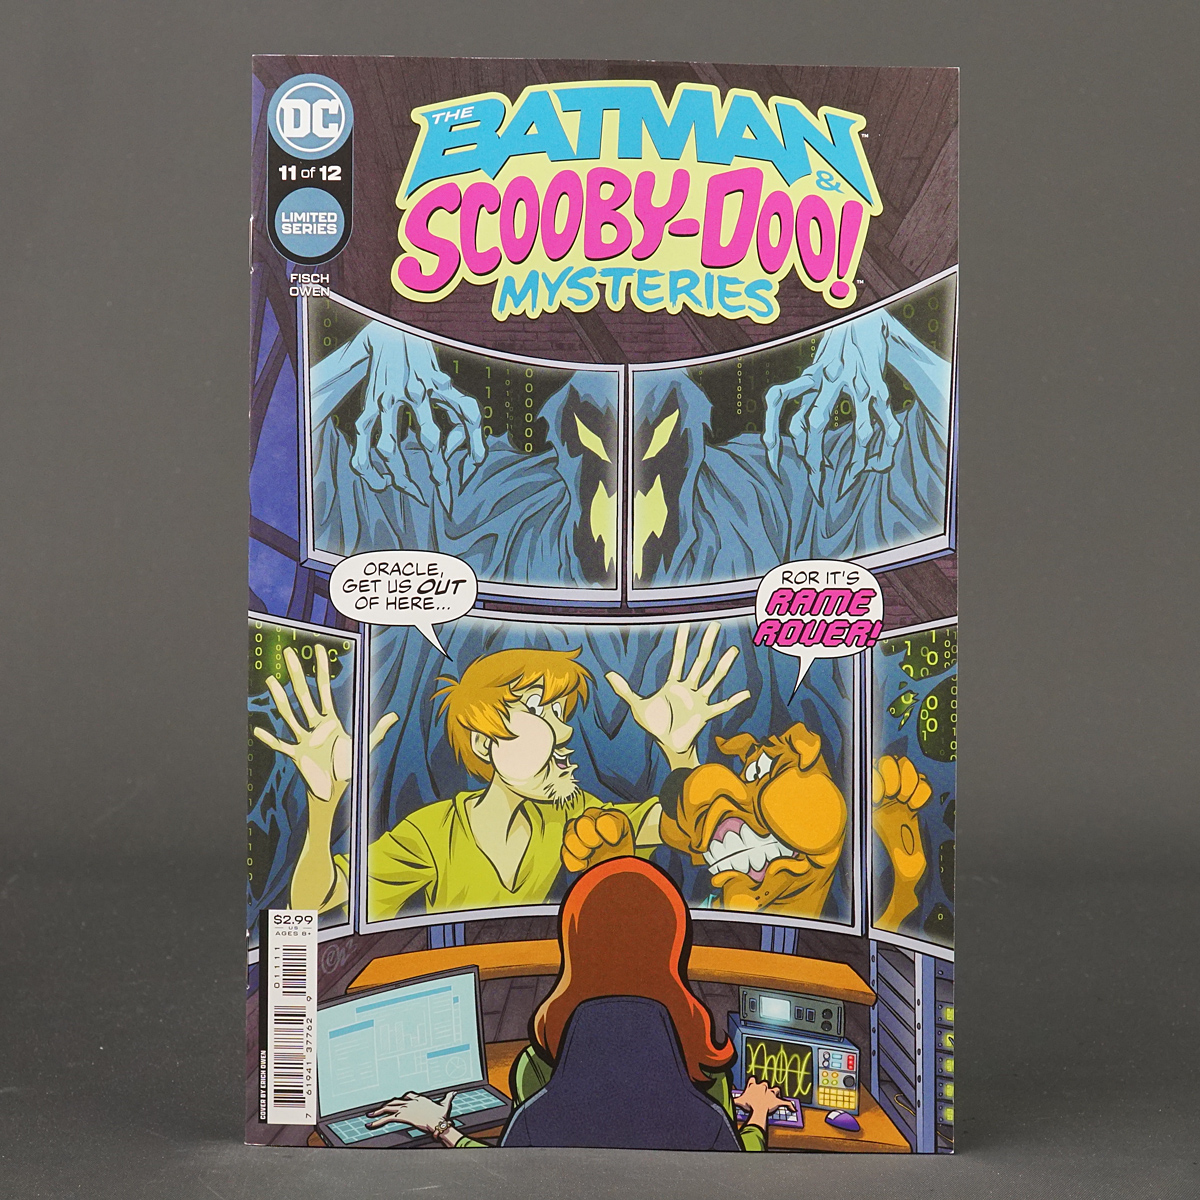 BATMAN & SCOOBY-DOO MYSTERIES #11 DC Comics 0623DC258 (A/CA) Owen (W) Fisch